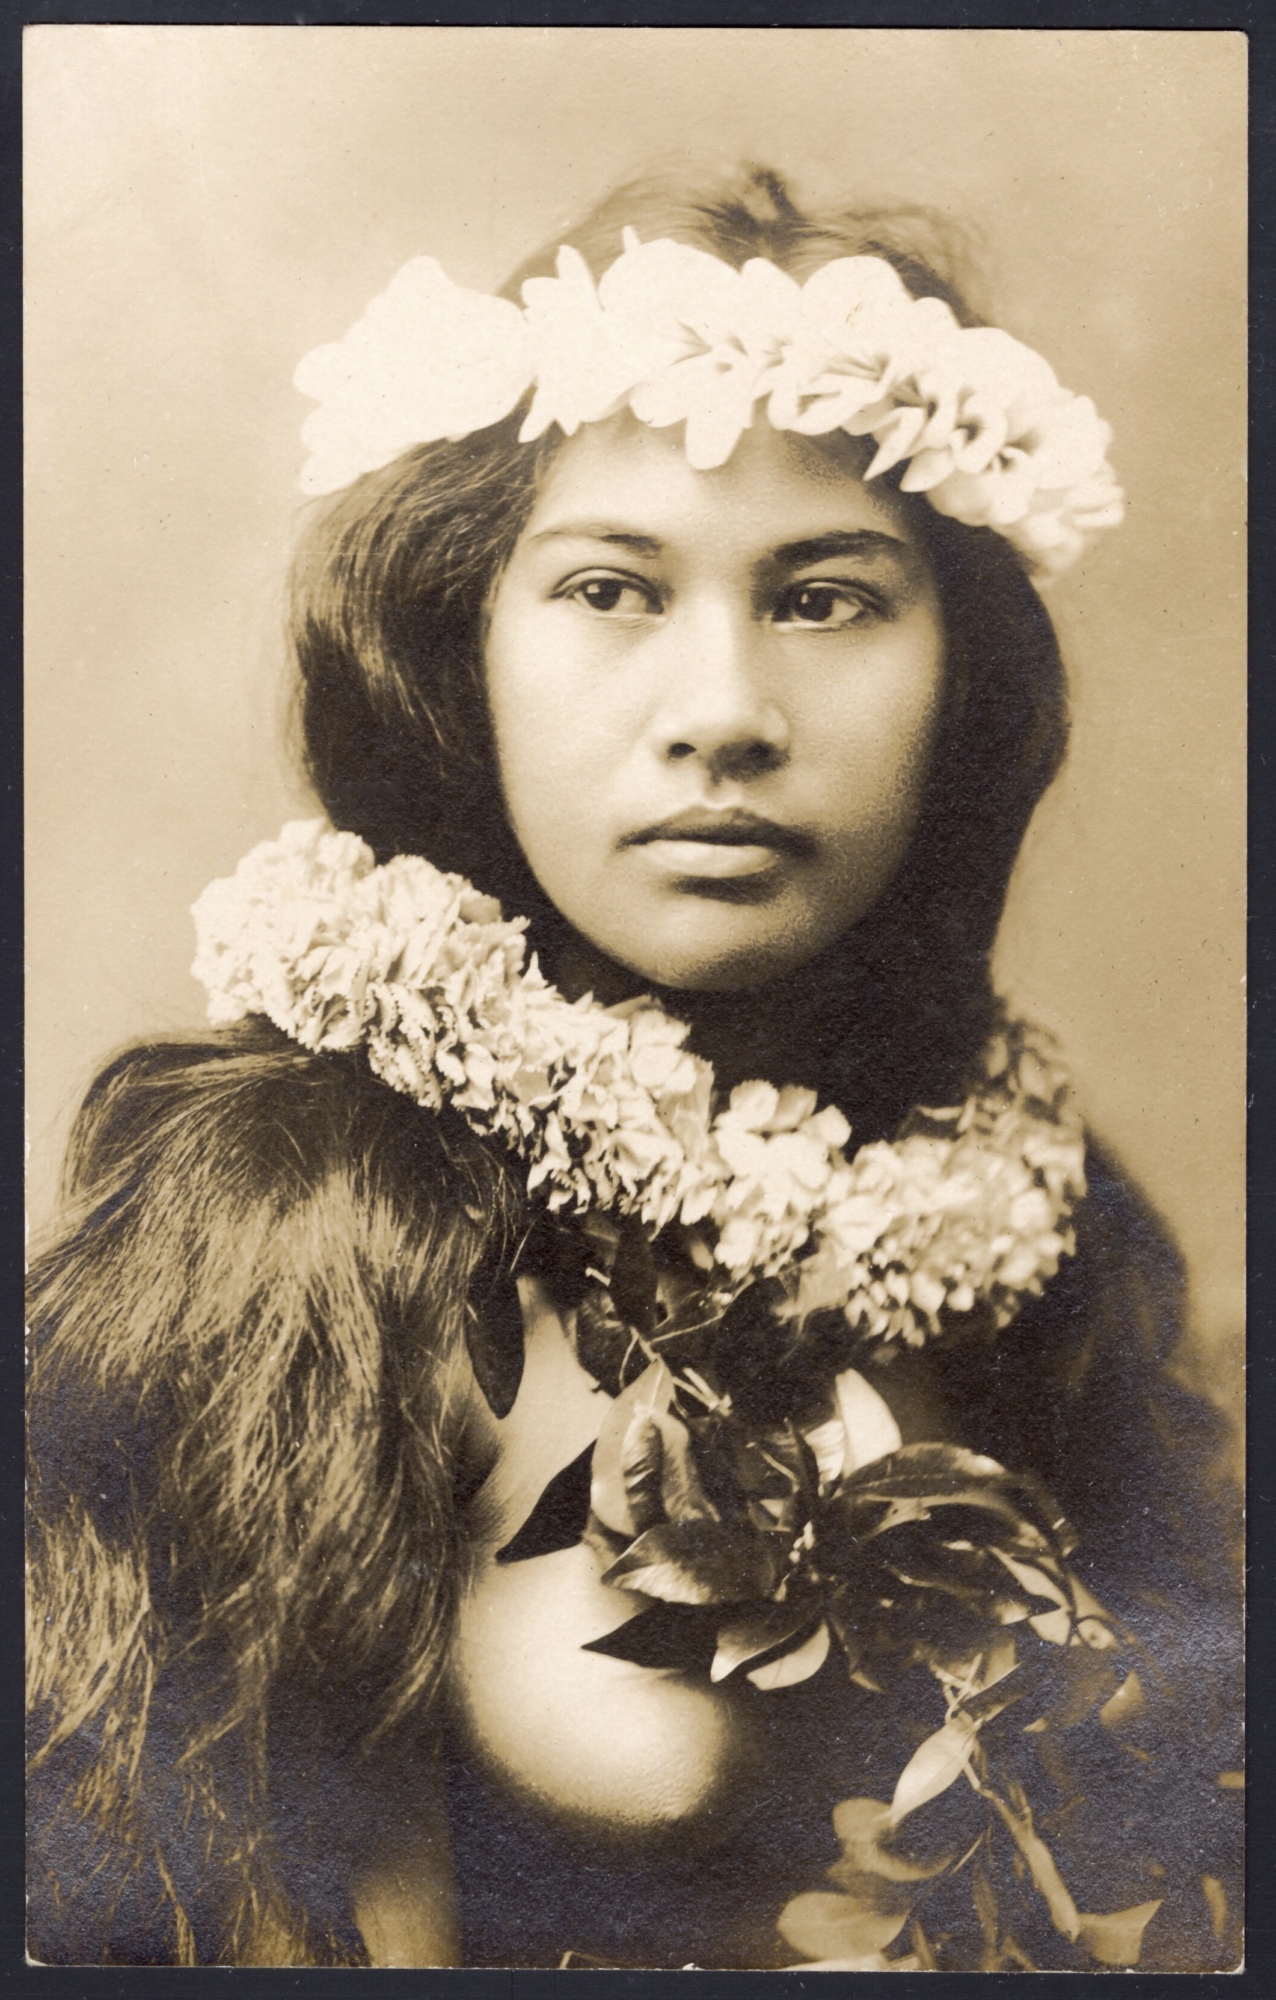 Naked Pics Of Hawaiian Women Telegraph